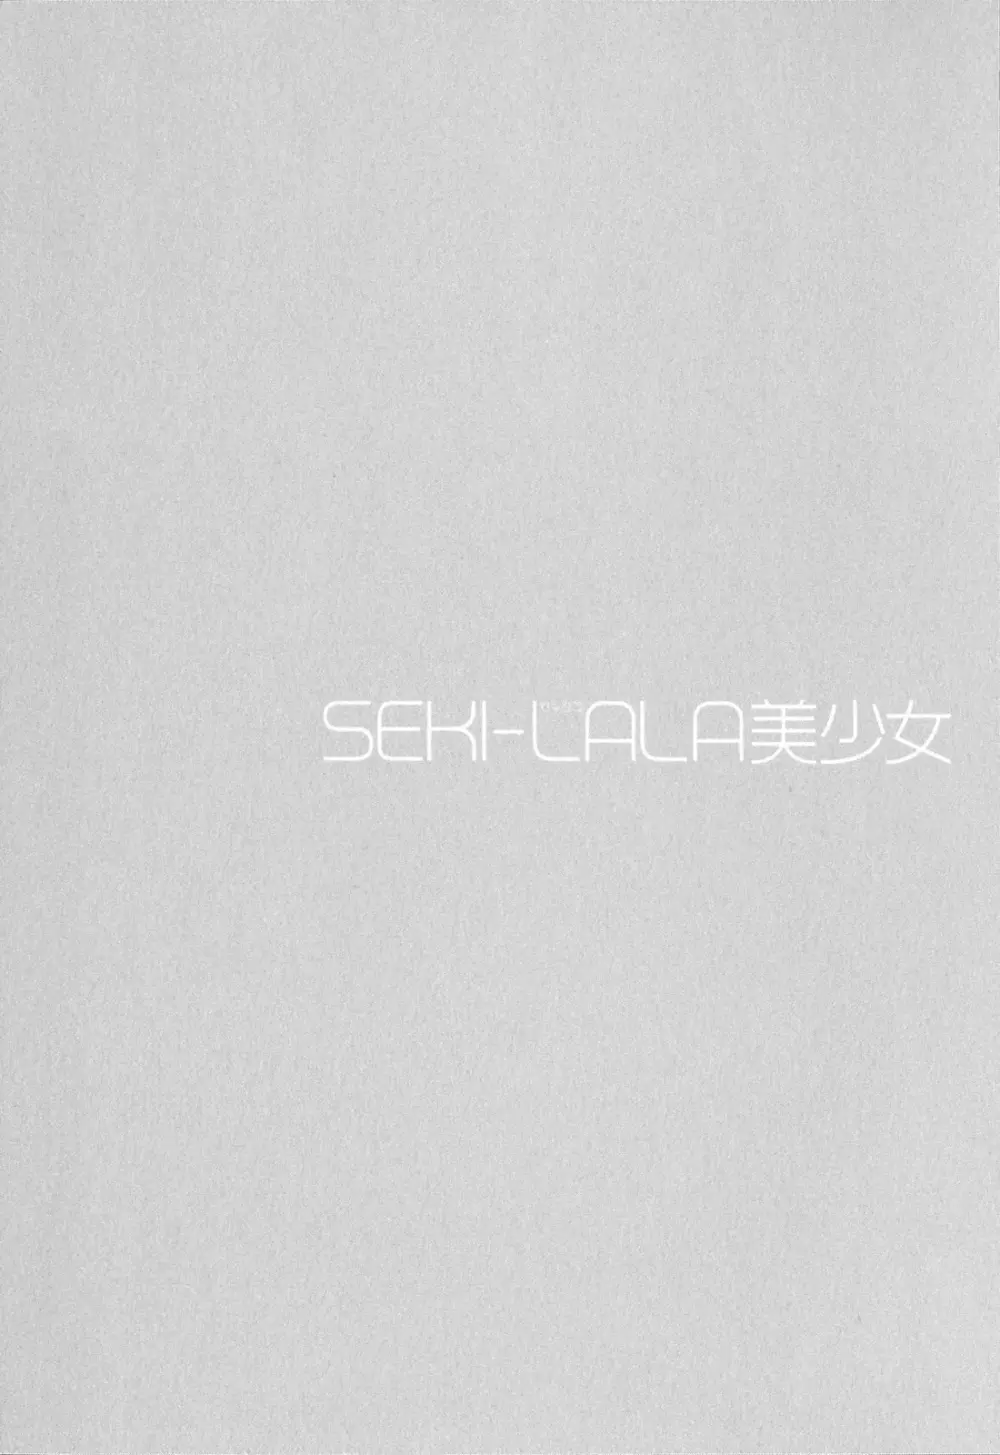 SEKI-LALA美少女 141ページ